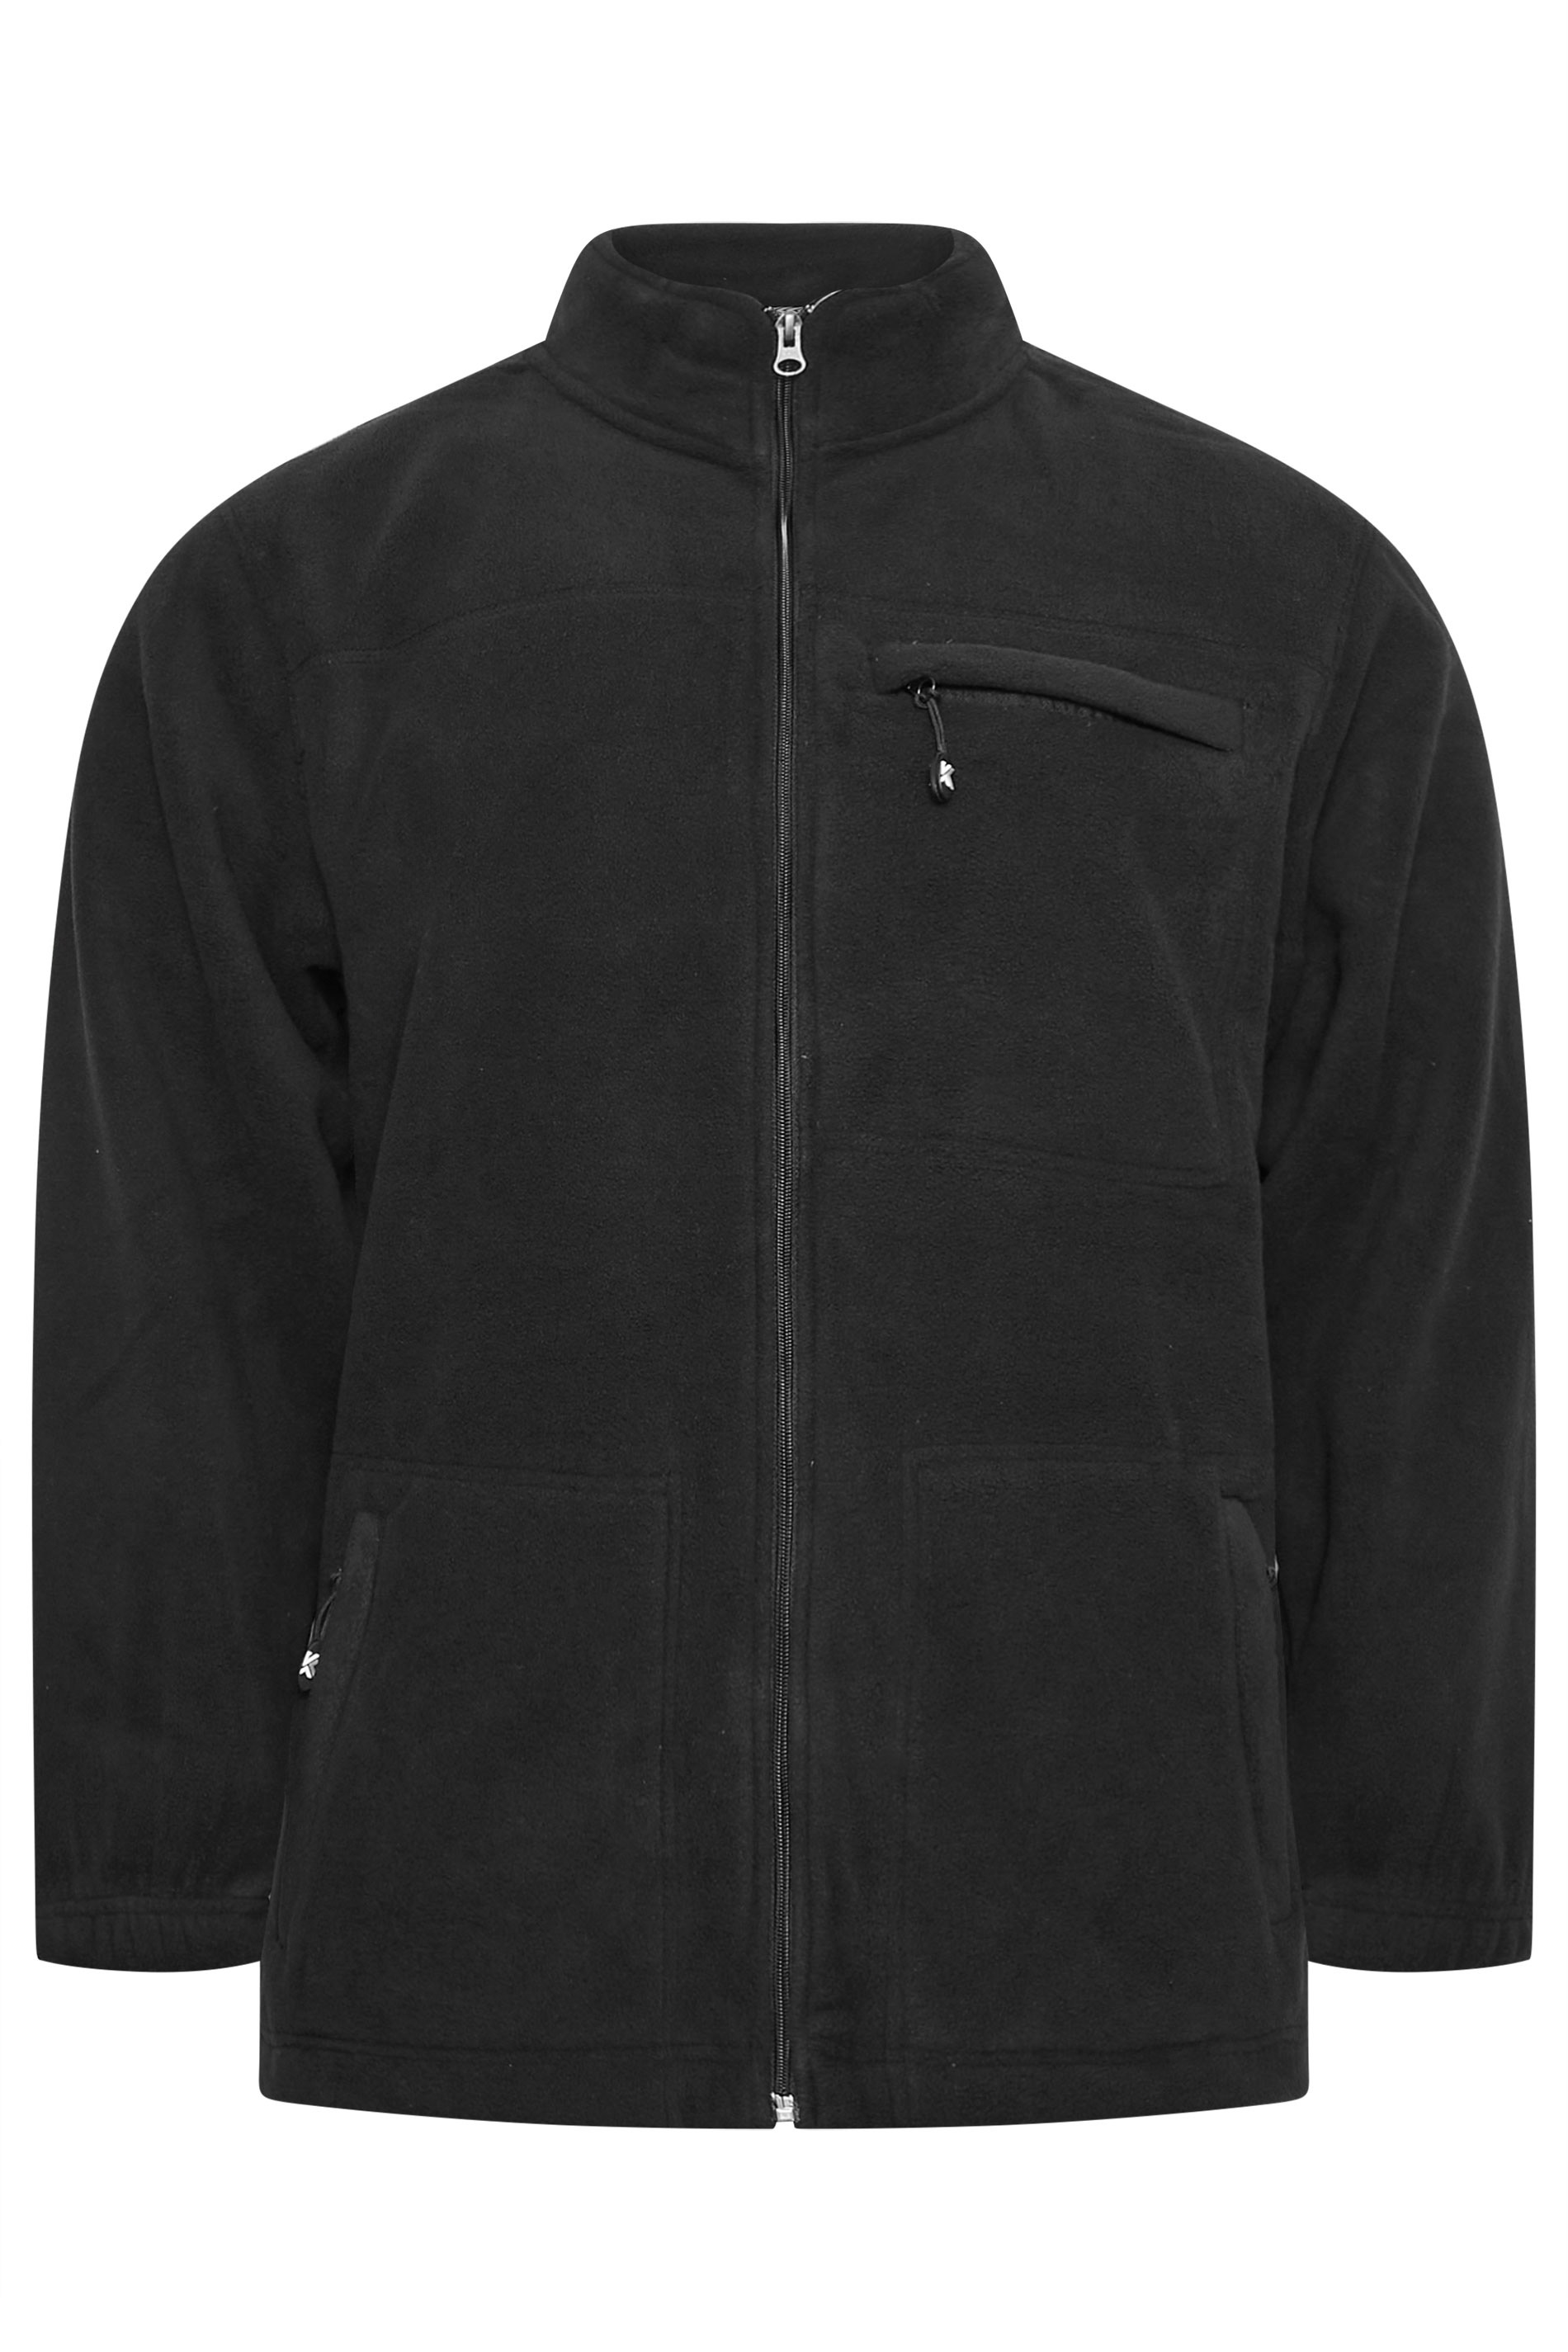 KAM Big & Tall Black Fleece Jacket | BadRhino 3